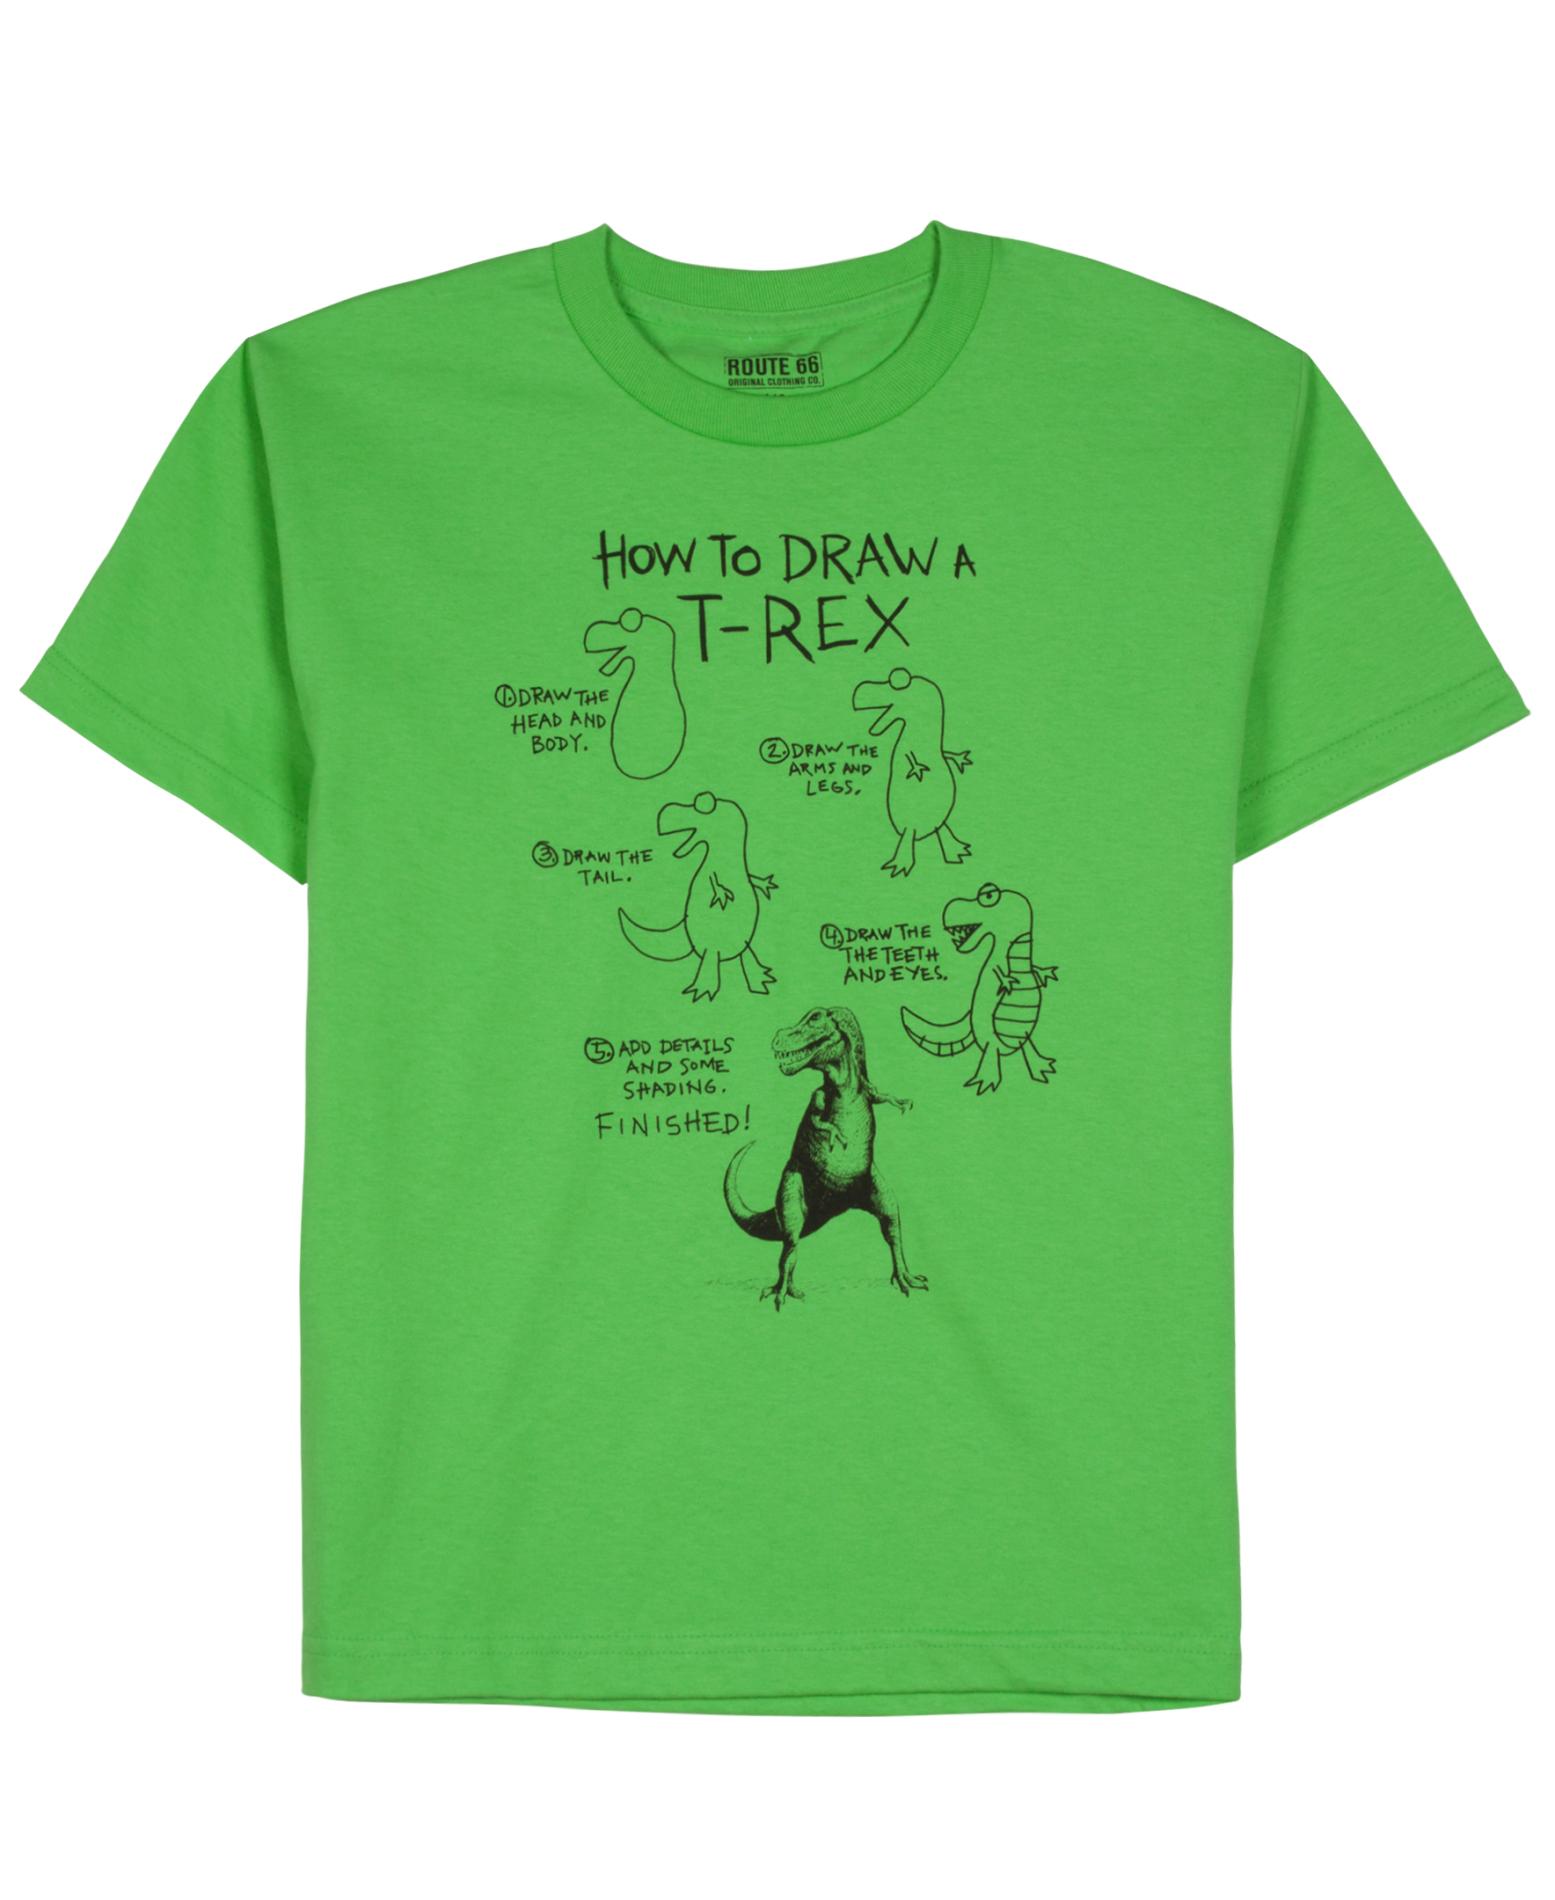 Route 66 Boy's Graphic T-Shirt - Draw A T-Rex